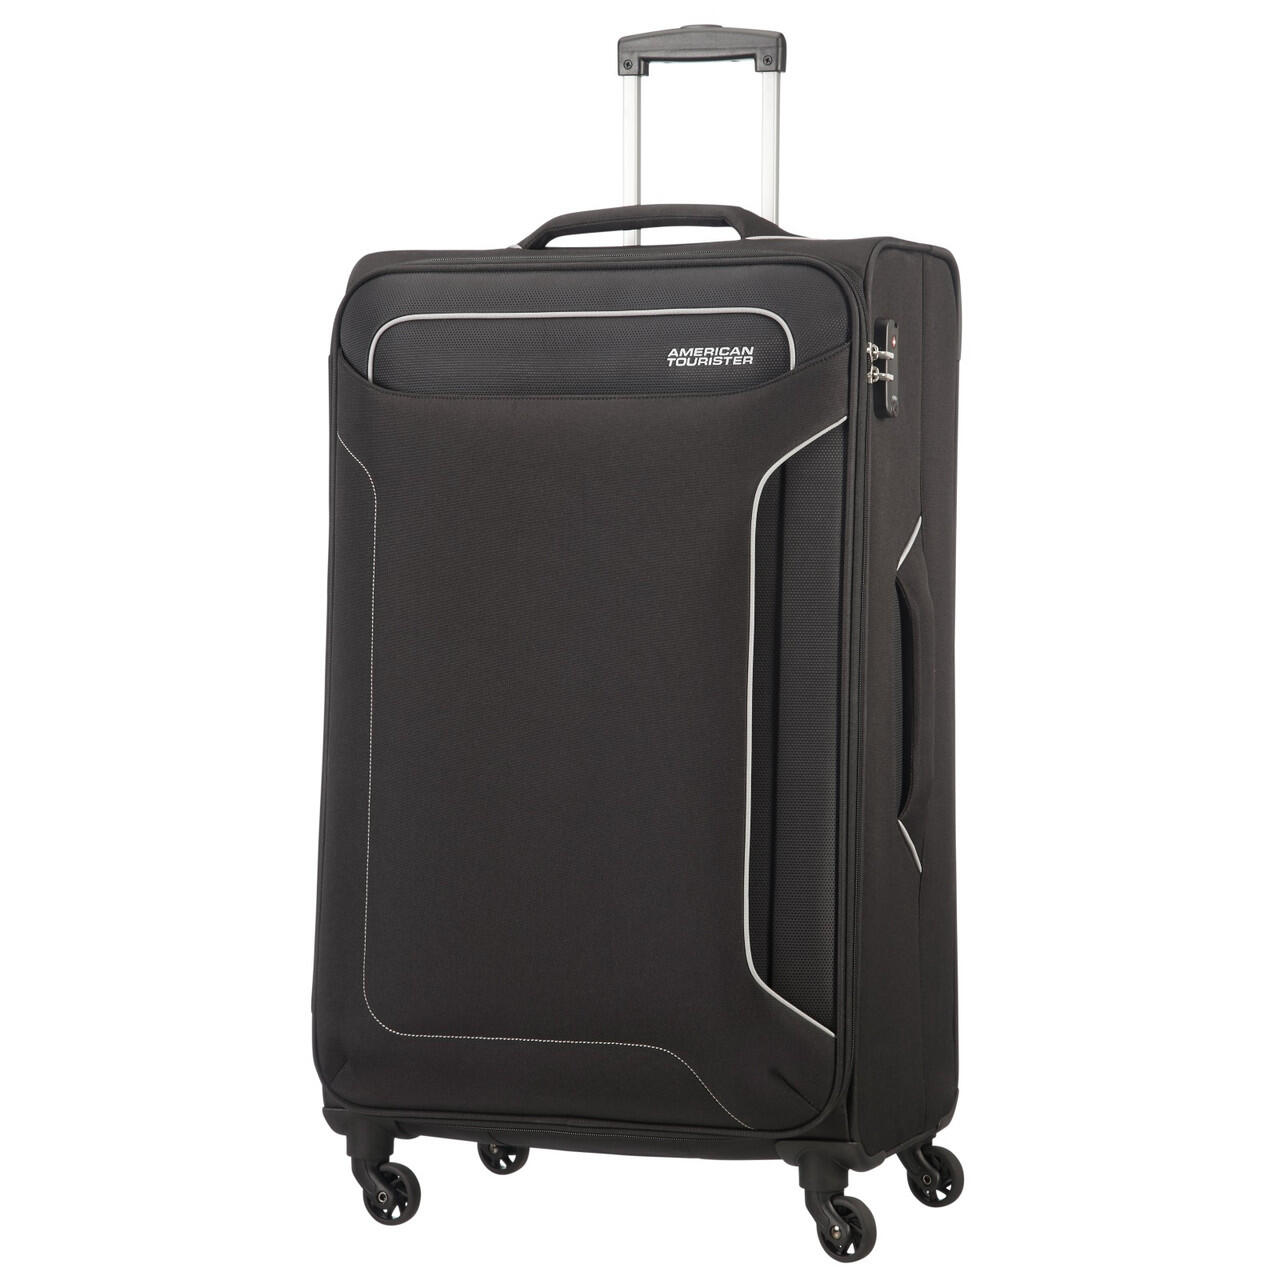 Holiday Heat 4 Wheel Suitcase - 79cm - Black 2/7